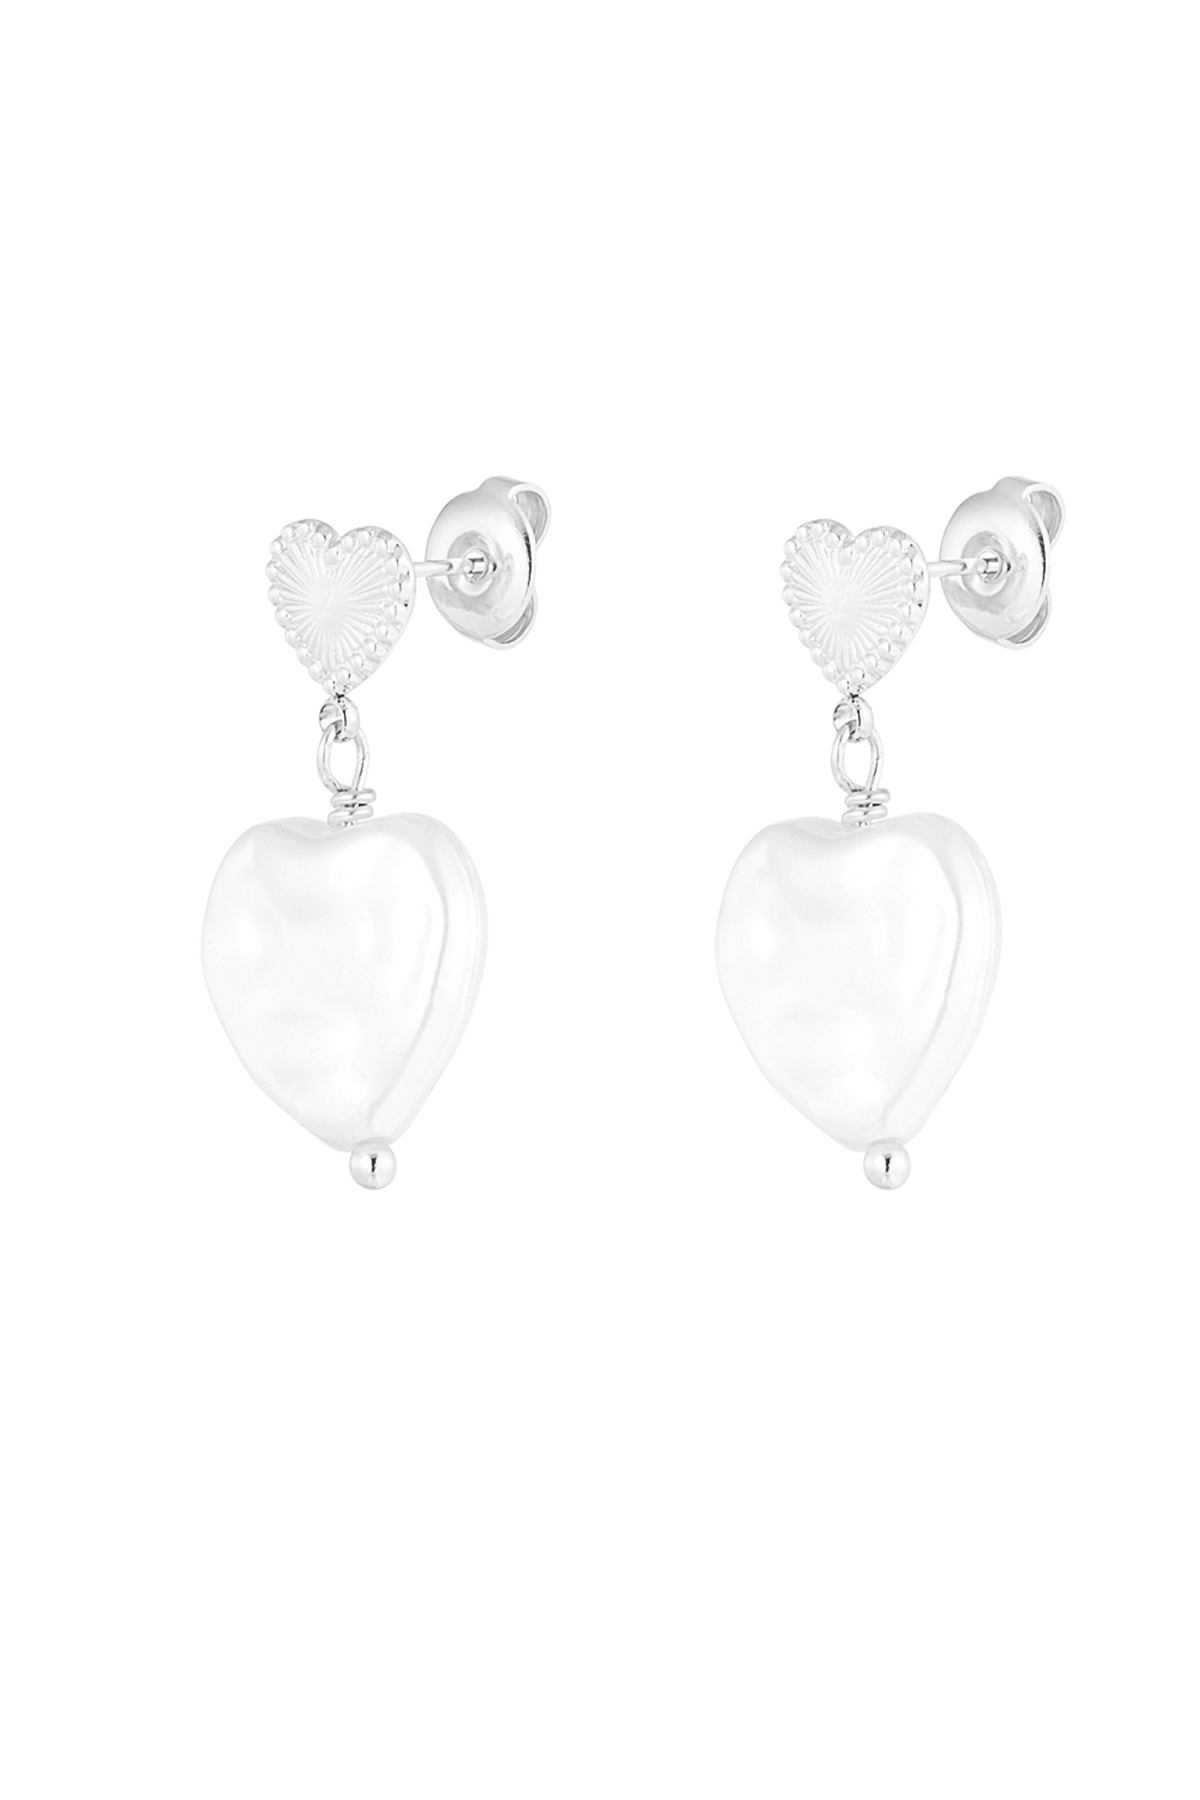 Double heart earrings large pearl - silver h5 